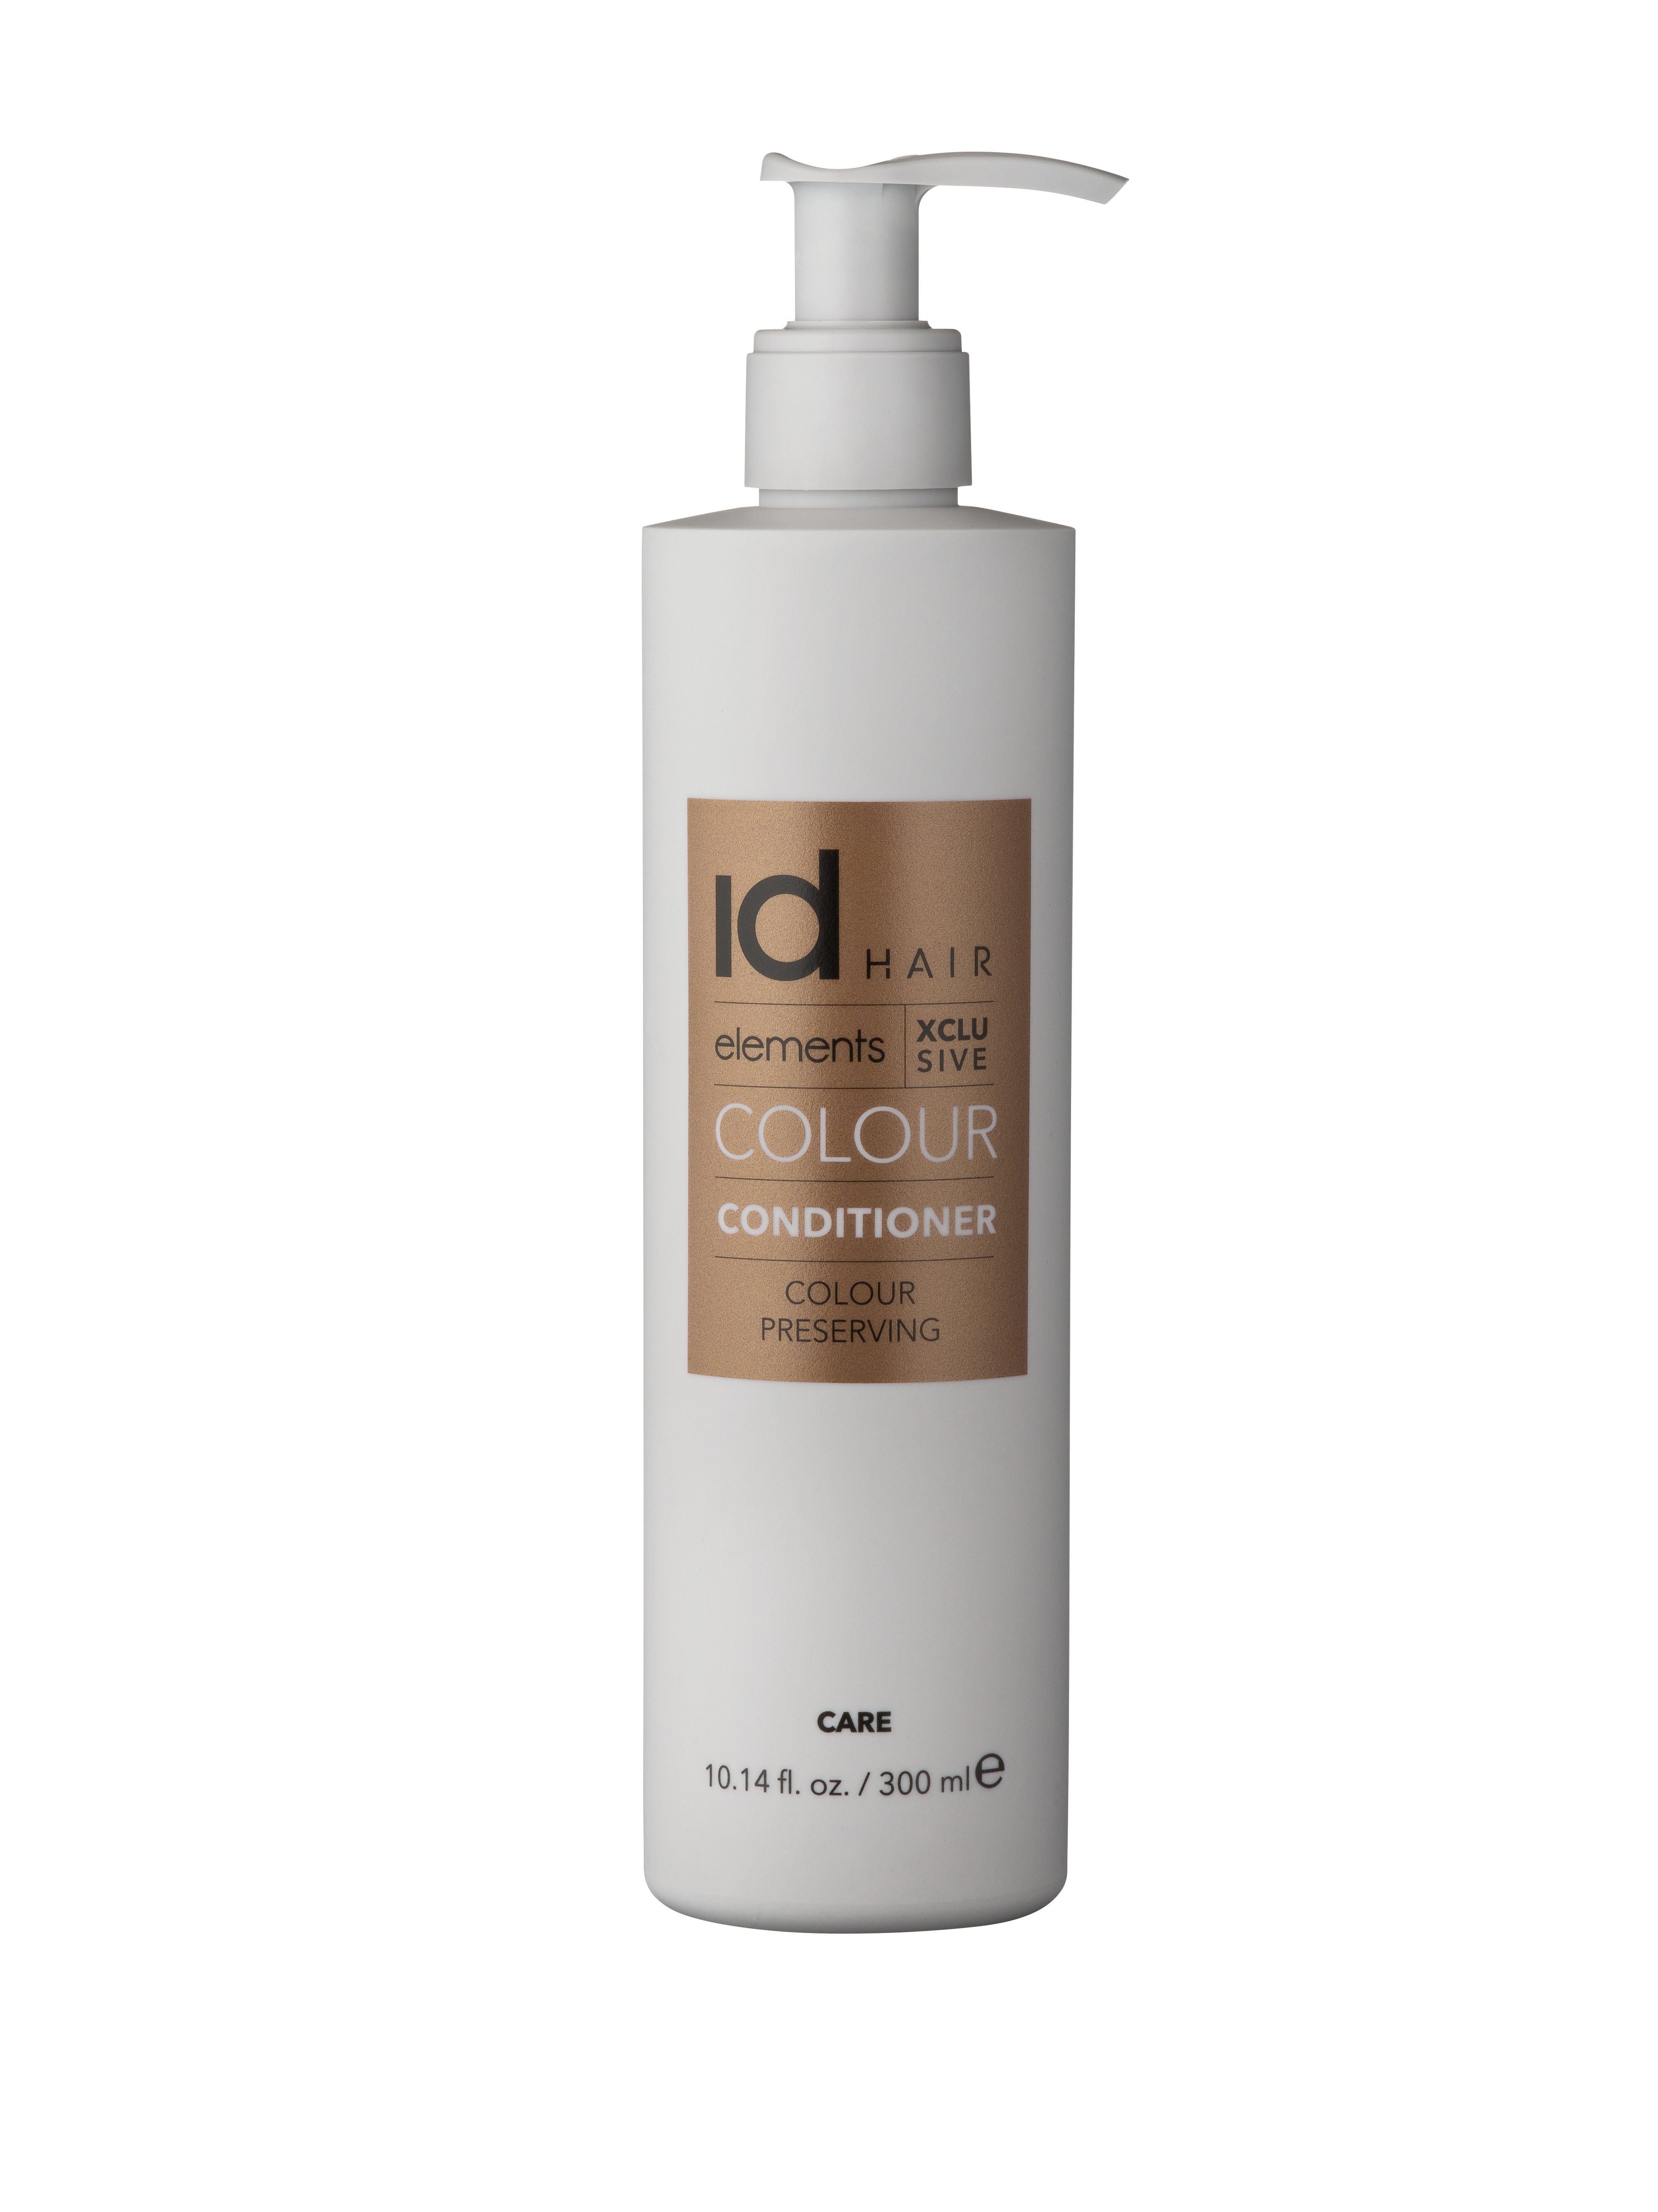 IdHAIR - Elements Xclusive Colour Conditioner 300 ml - Skjønnhet